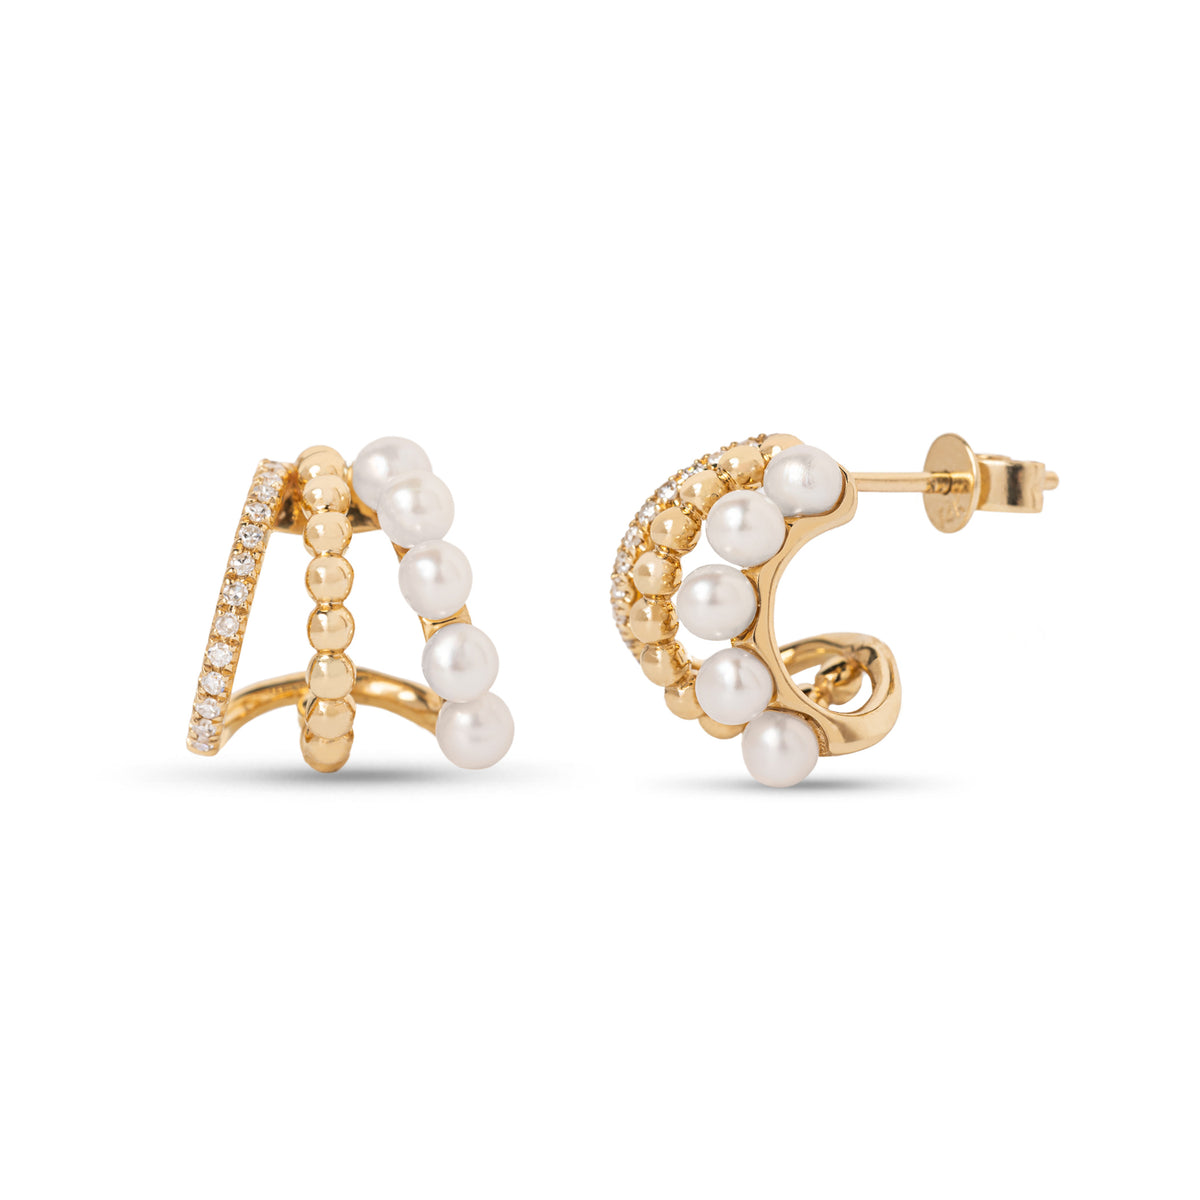 14k yellow gold diamond, gold, and pearl 3 row huggies earrings